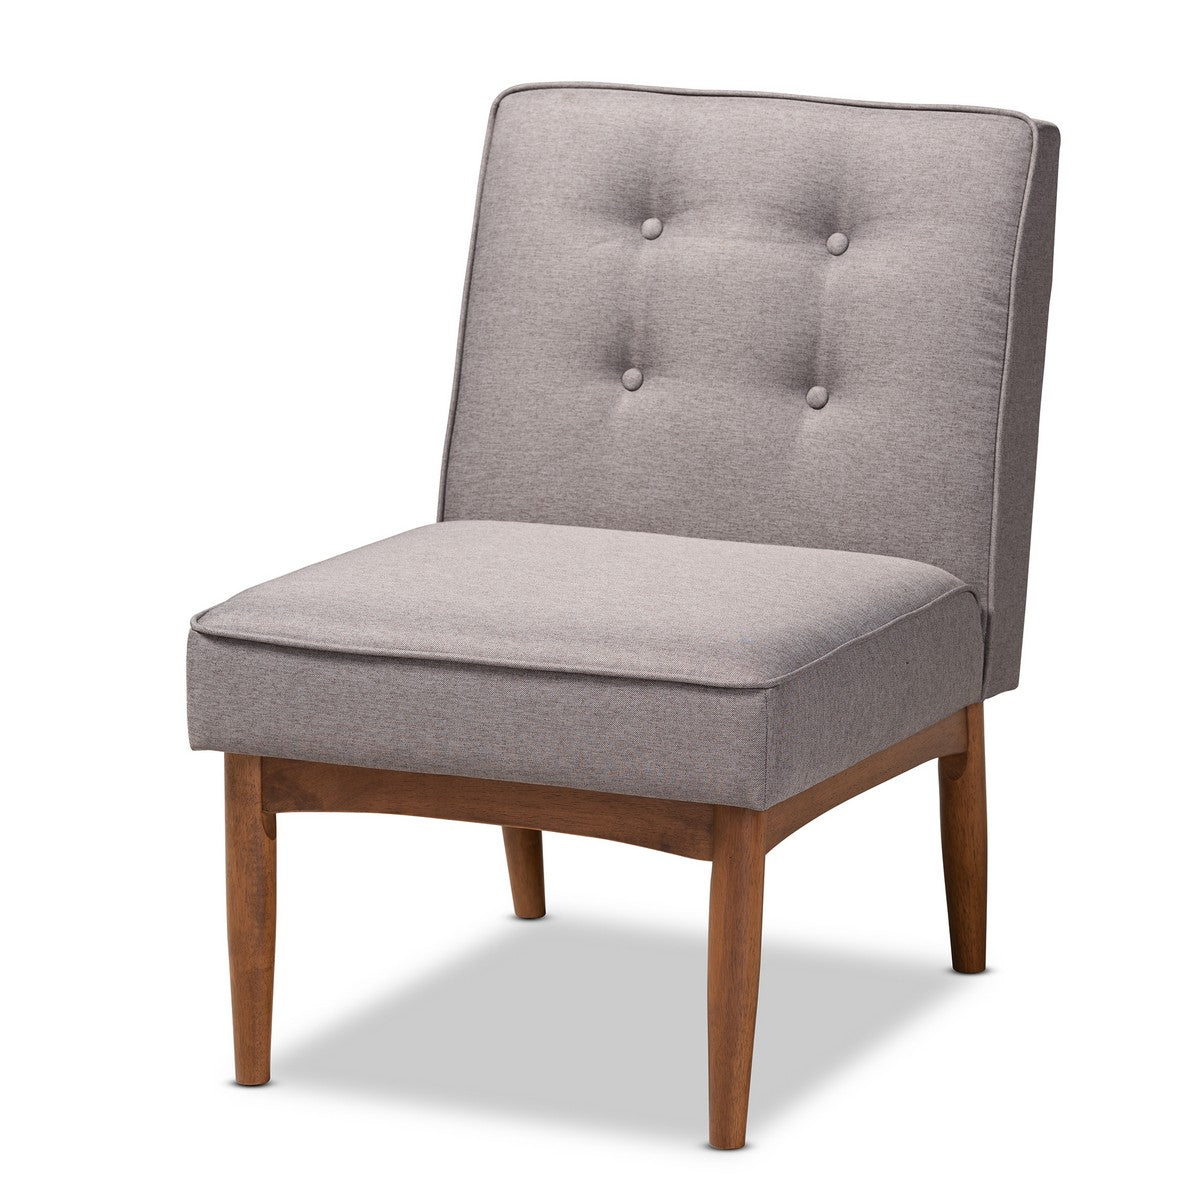 Baxton Studio Arvid Mid-Century Modern Gray Fabric Upholstered Wood Dining Chair Baxton Studio-dining chair-Minimal And Modern - 1